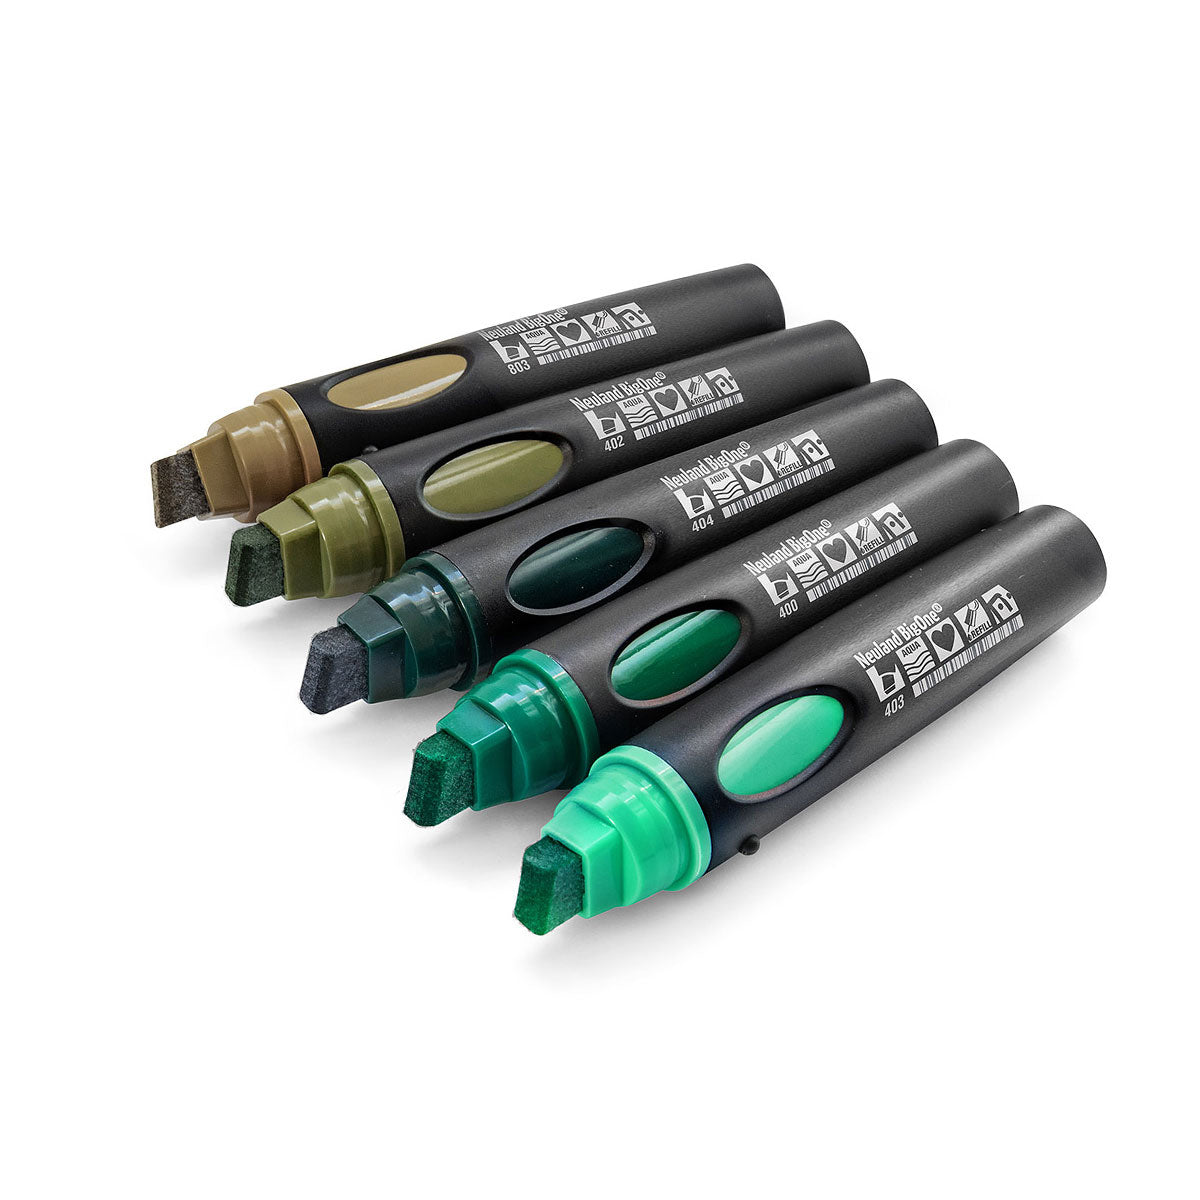 Neuland BigOne®, Keilspitze 6-12 mm, 5er Farbsets- set no. 12 back to green